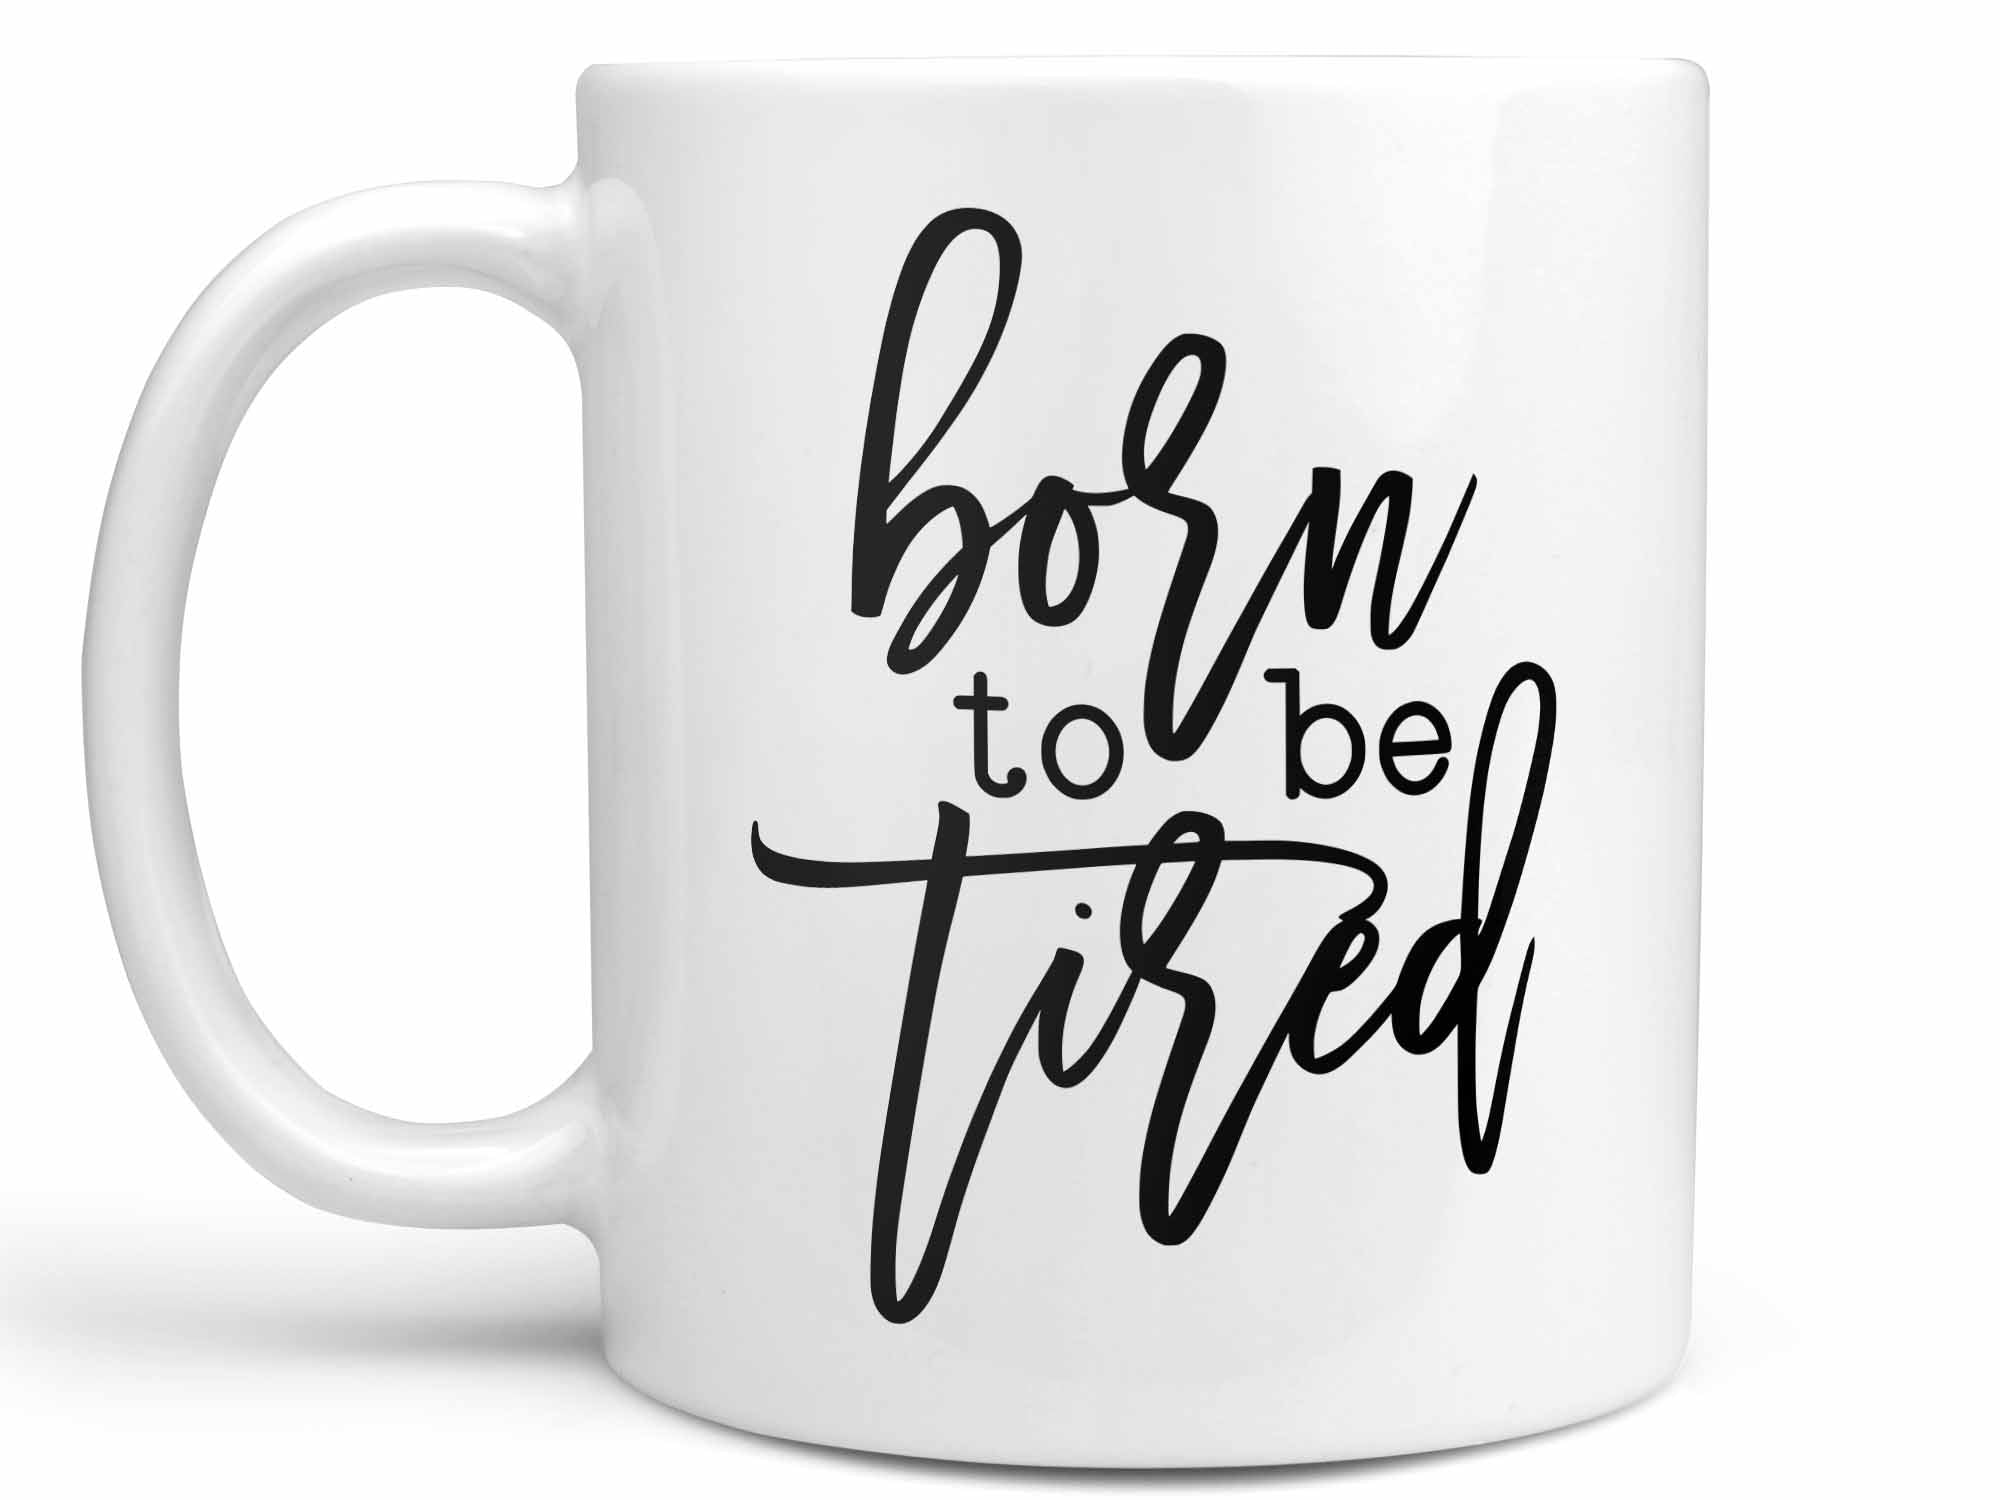 Born to Be Tired Coffee Mug,Coffee Mugs Never Lie,Coffee Mug